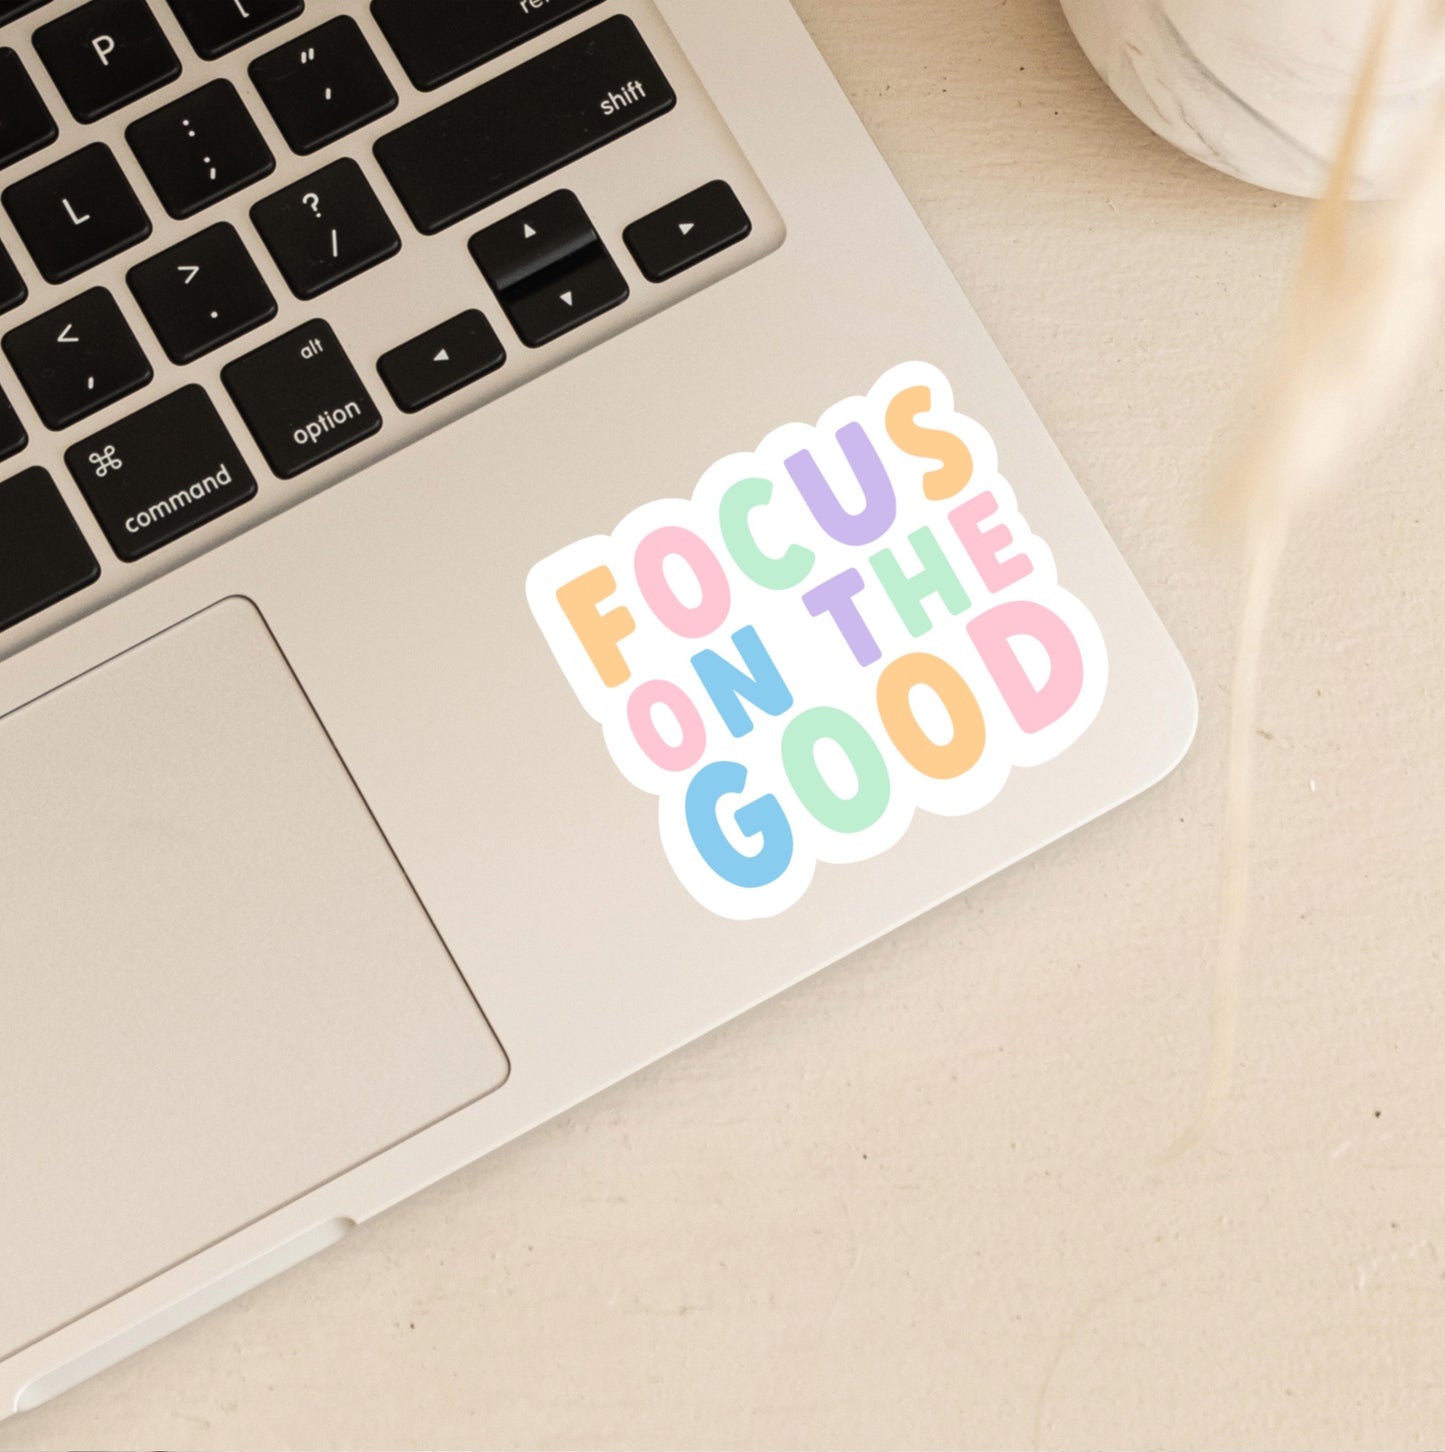 Focus On the Good | Motivation